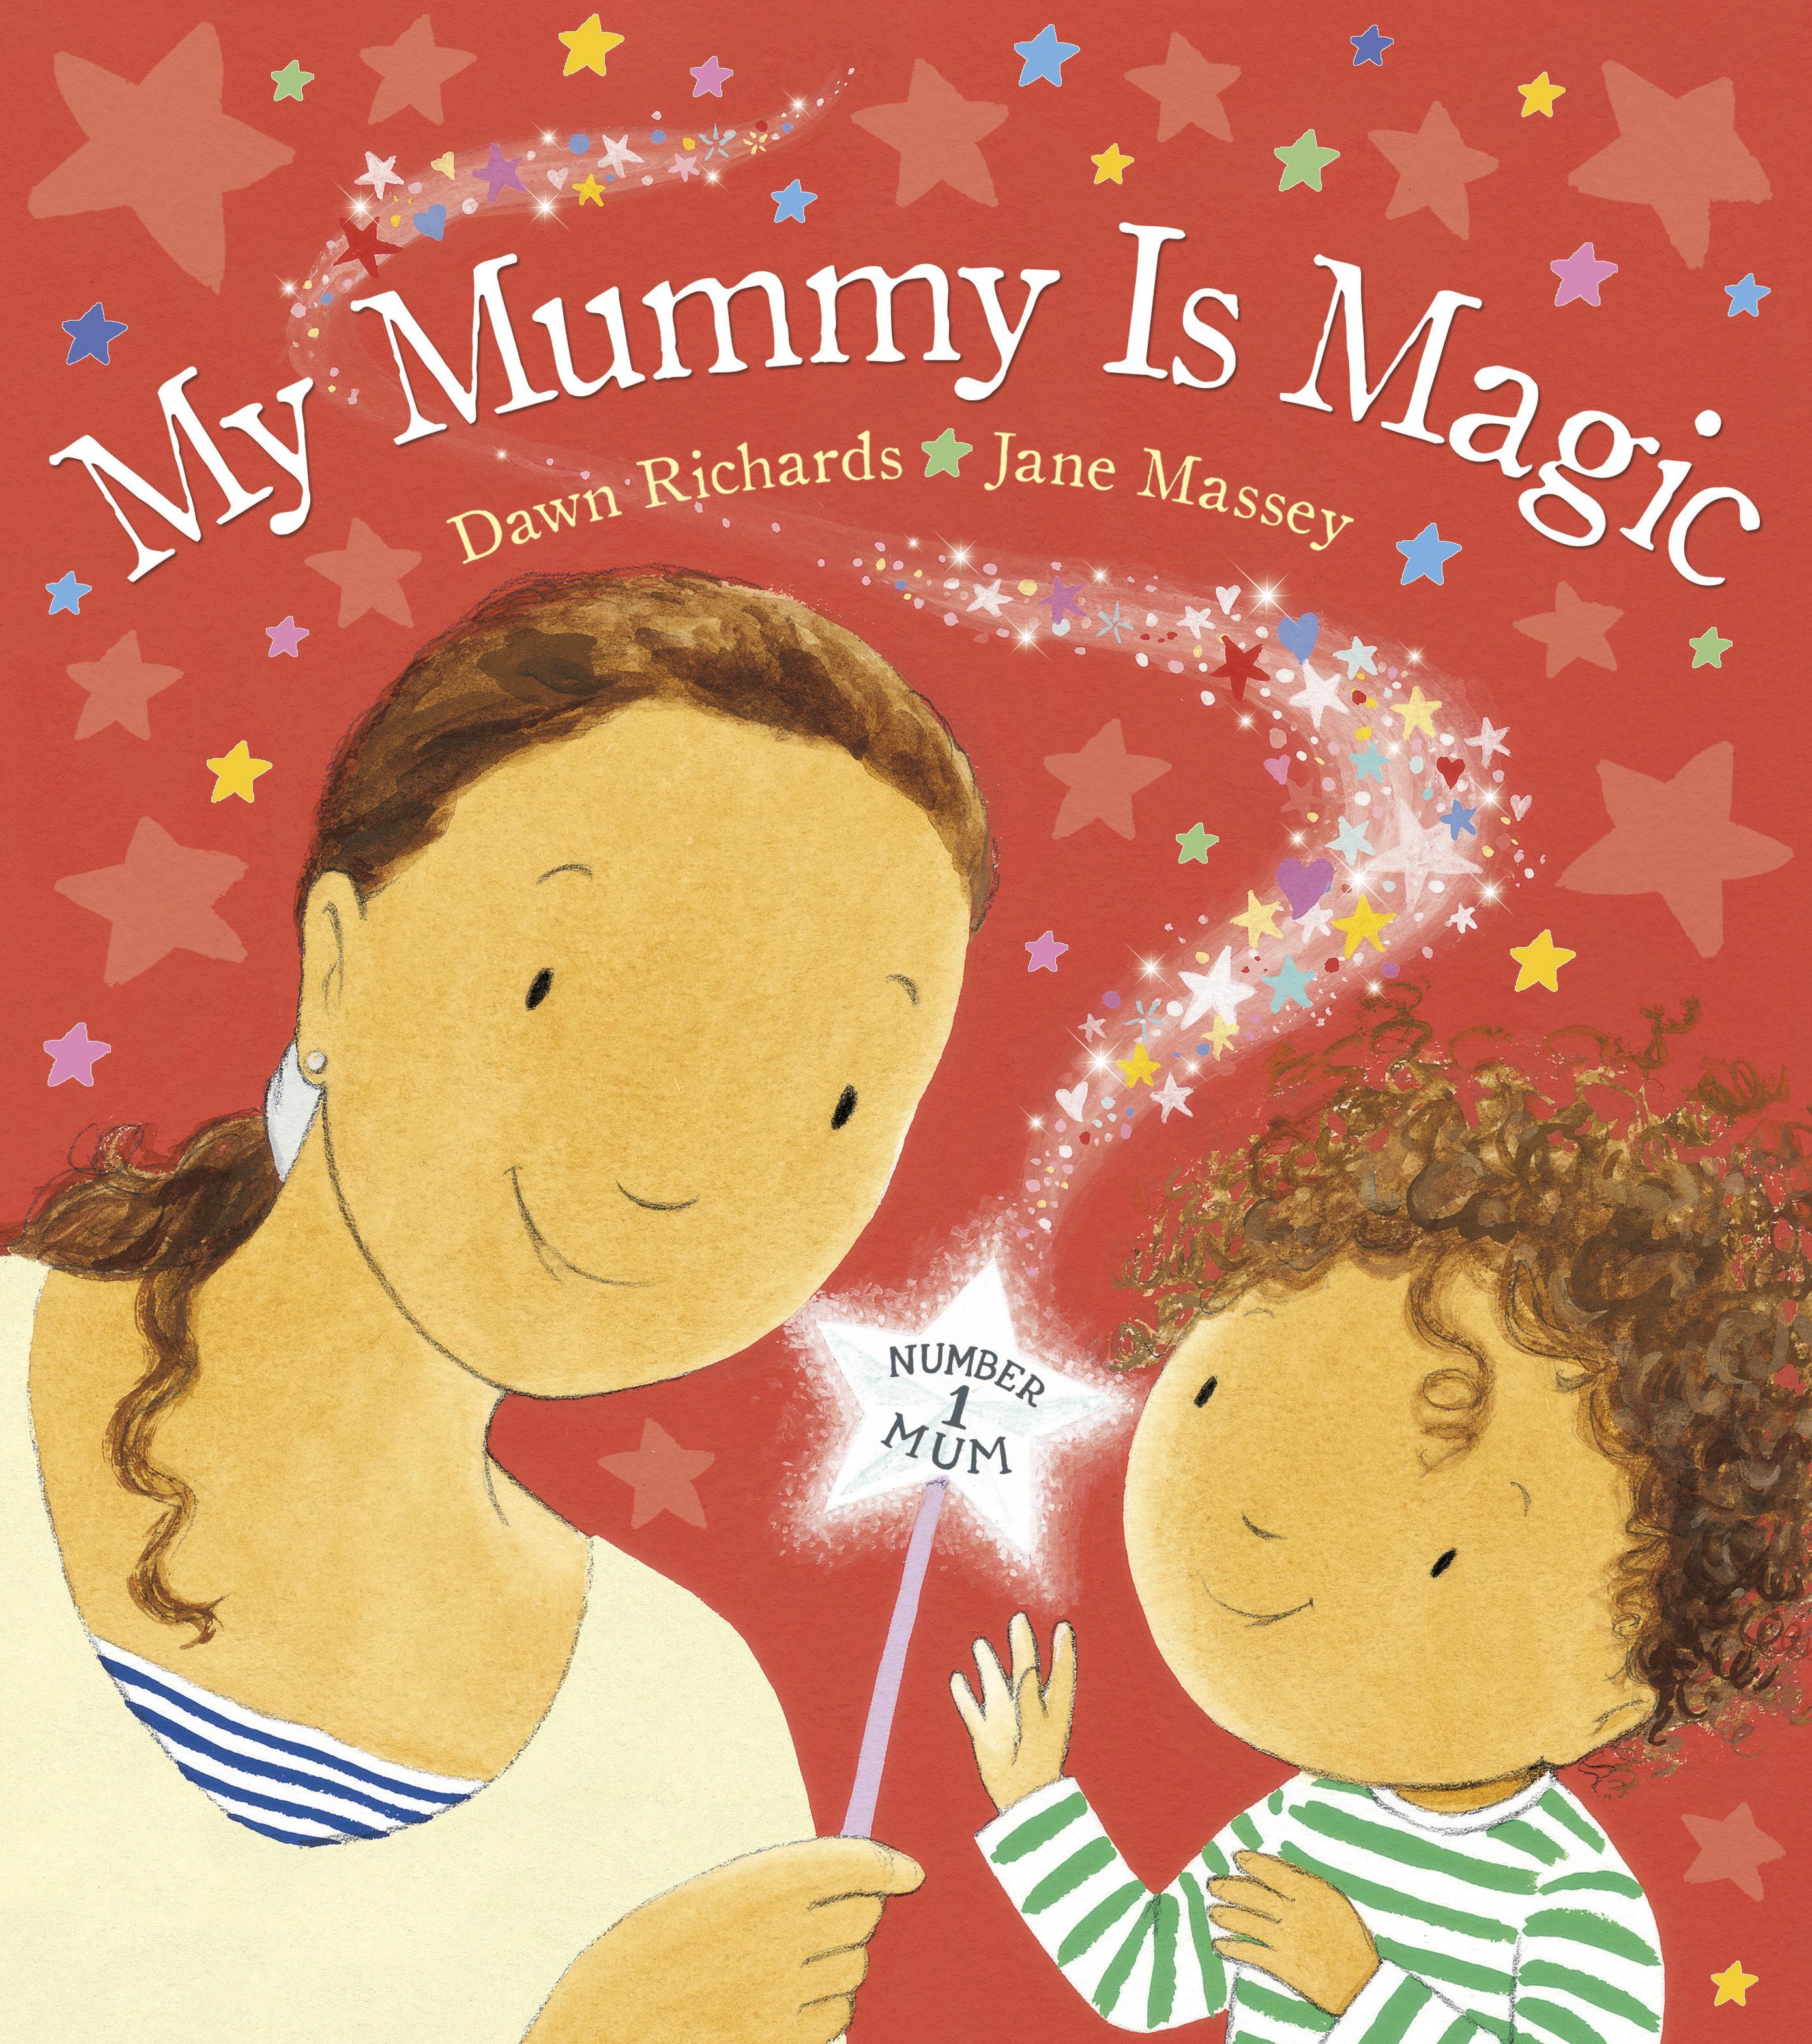 My Mummy is Magic - Dawn Richards